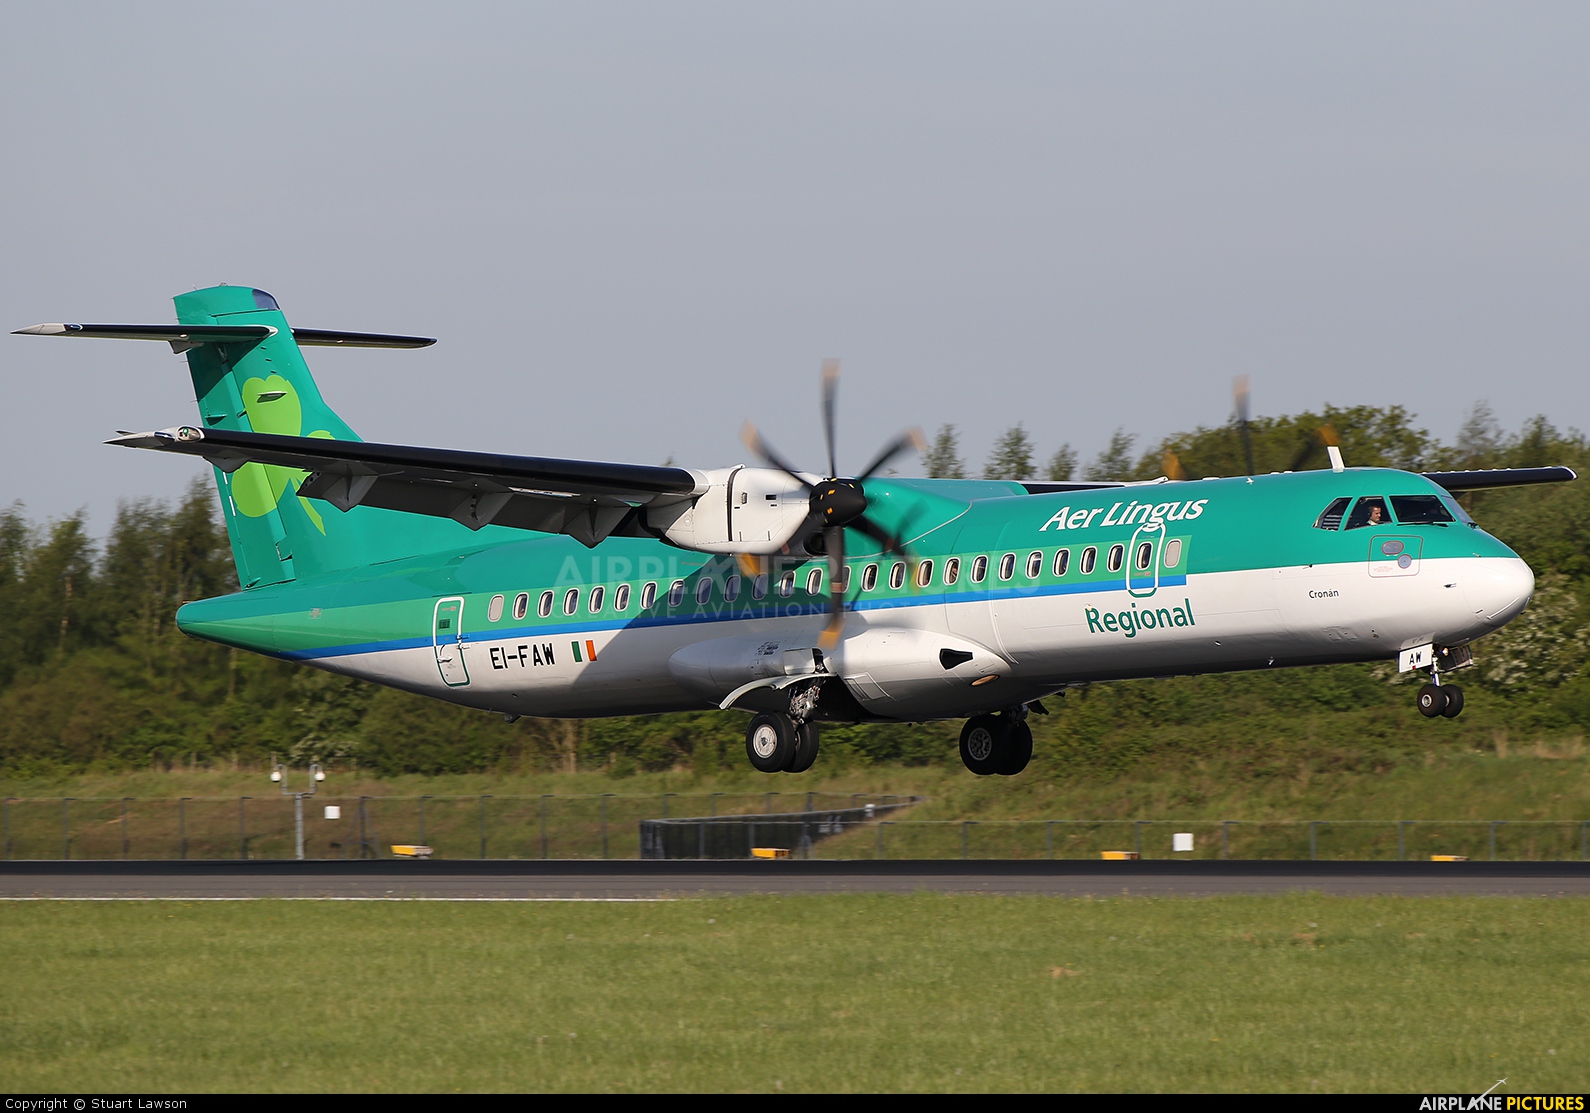 Aer Lingus Regional EI-FAW aircraft at Manchester